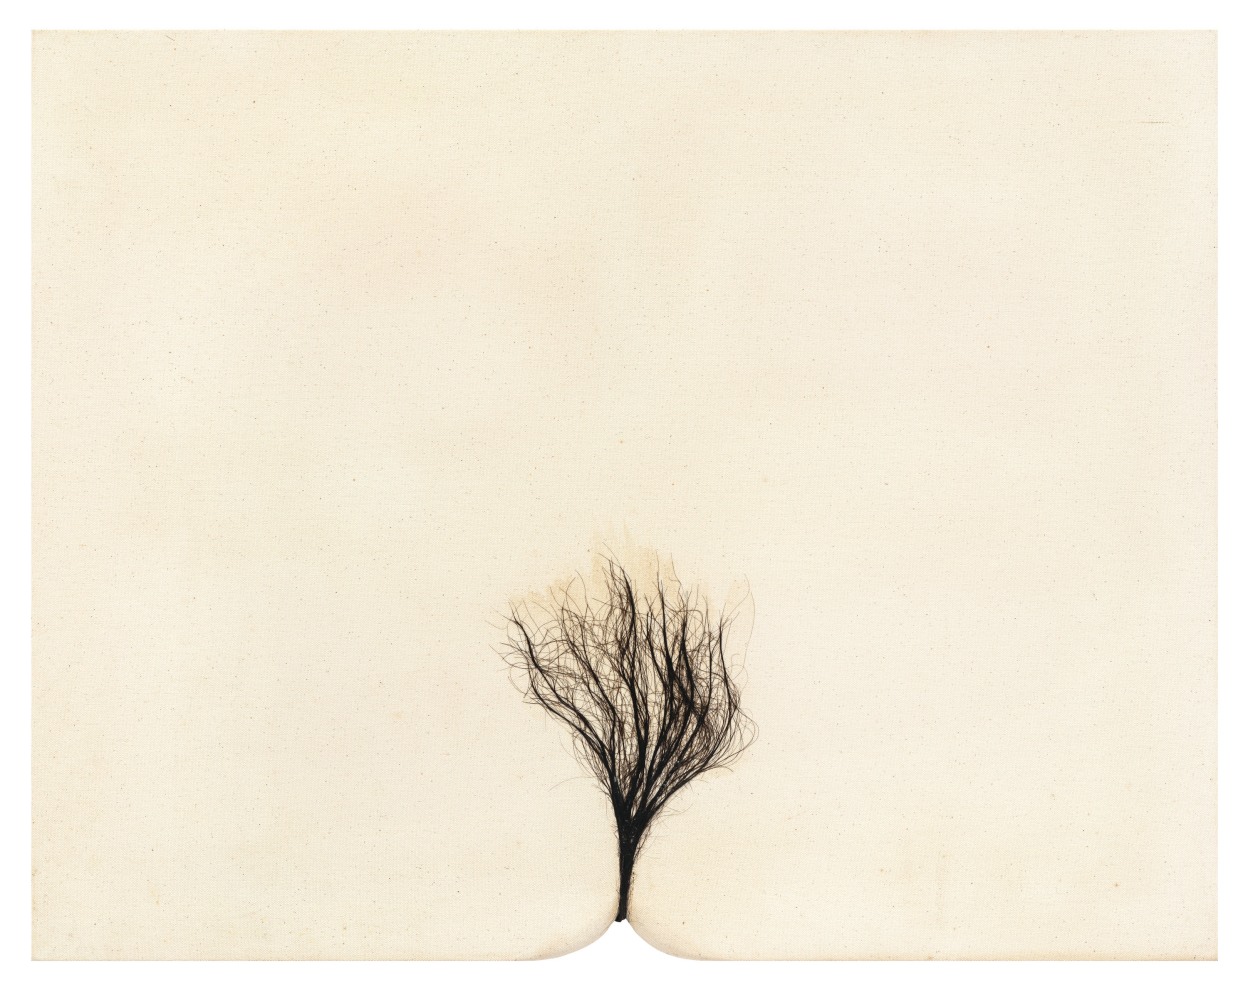 Seung-taek Lee

&amp;ldquo;Untitled&amp;rdquo;, 2018

Hair on canvas

21 3/4 x 27 3/4 inches

55.5 x 70 cm

LEE 15

$40,000